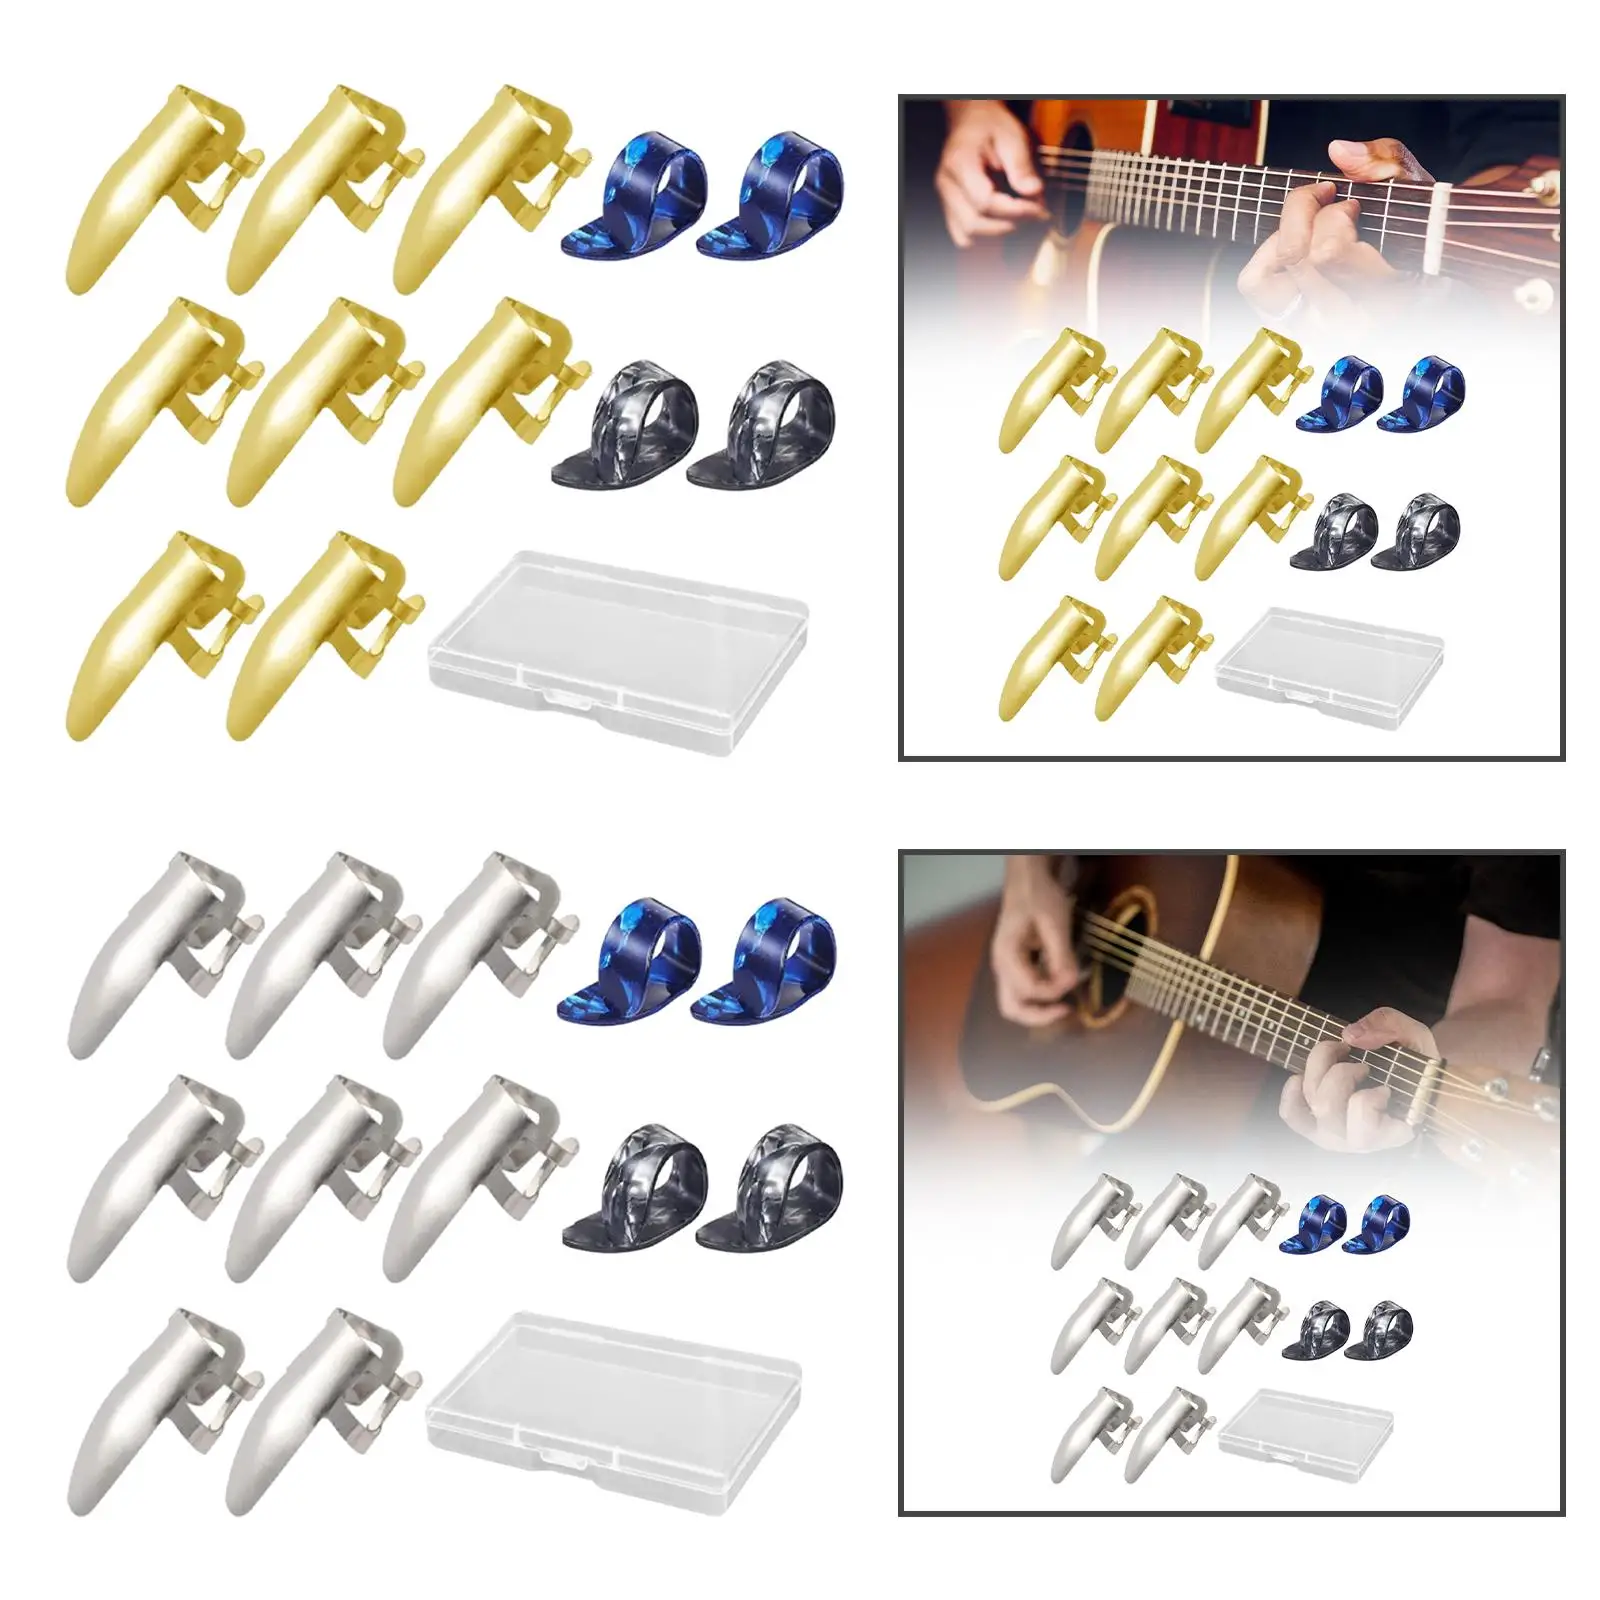 Metal Finger Picks Replacement Parts for Acoustic Guitar Guitar Accessories Guitar Plectrums Thumb Finger pick Guitar Picks